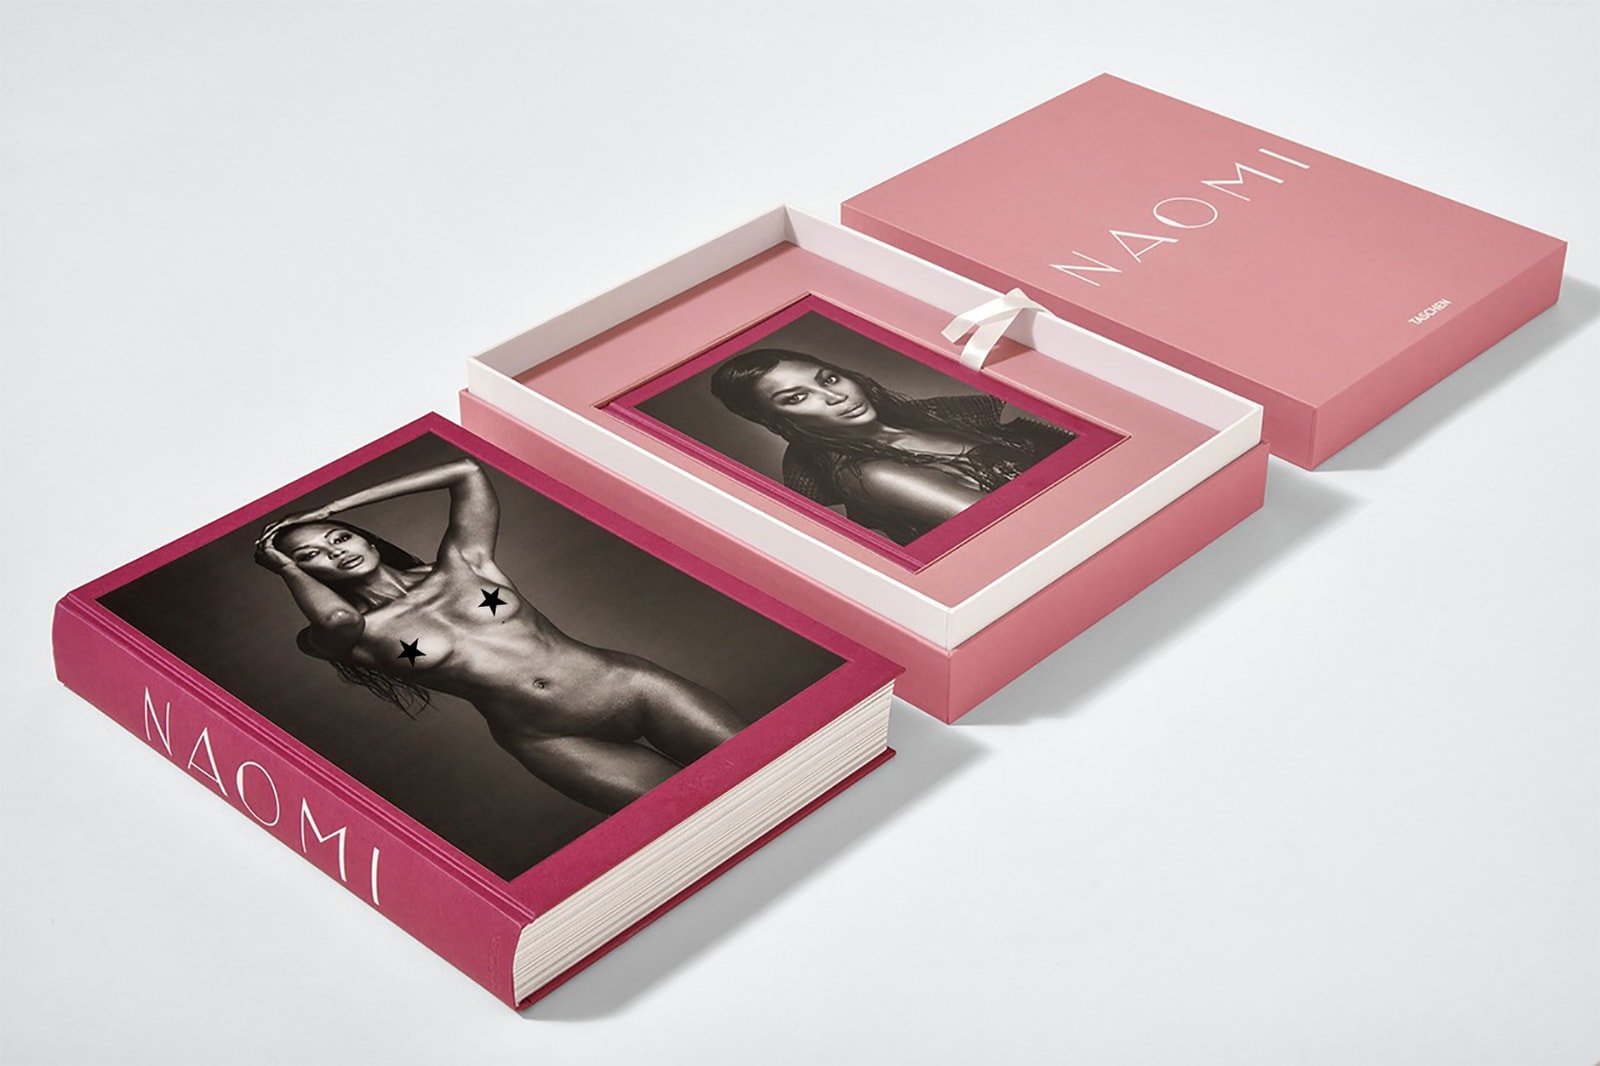 Naomi Campbell Taschen Photography Book Release Iicf